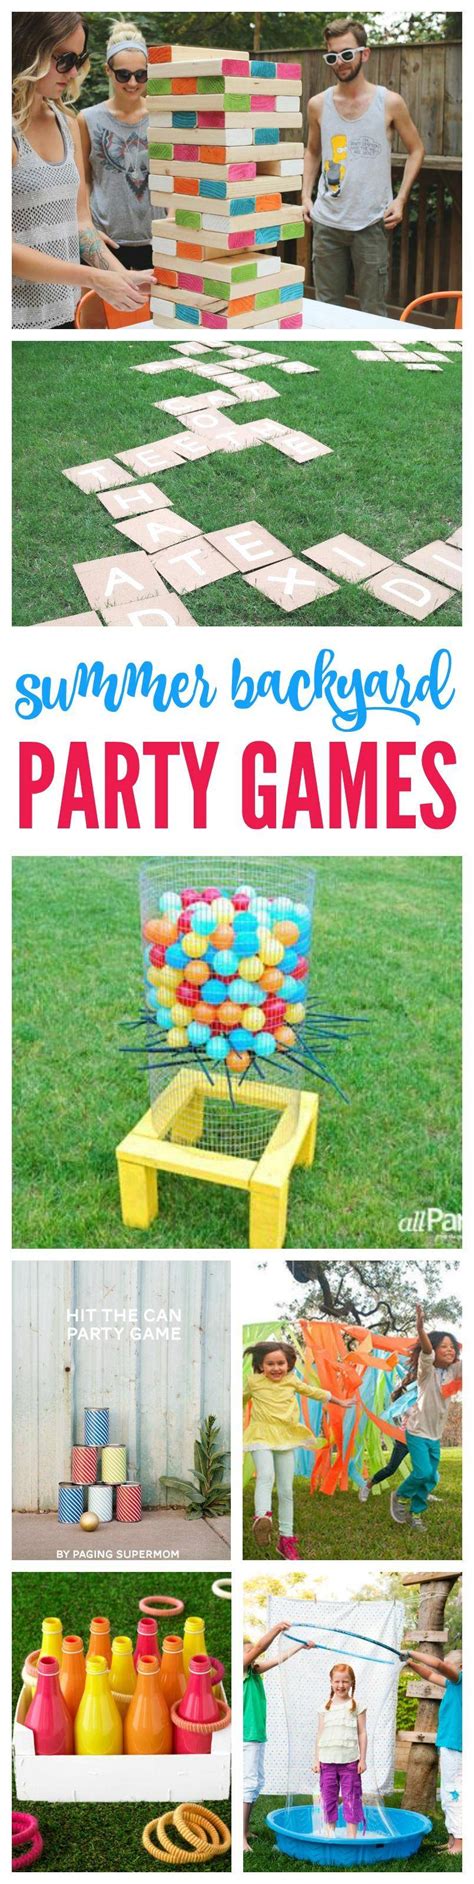 Summer Backyard Party Games